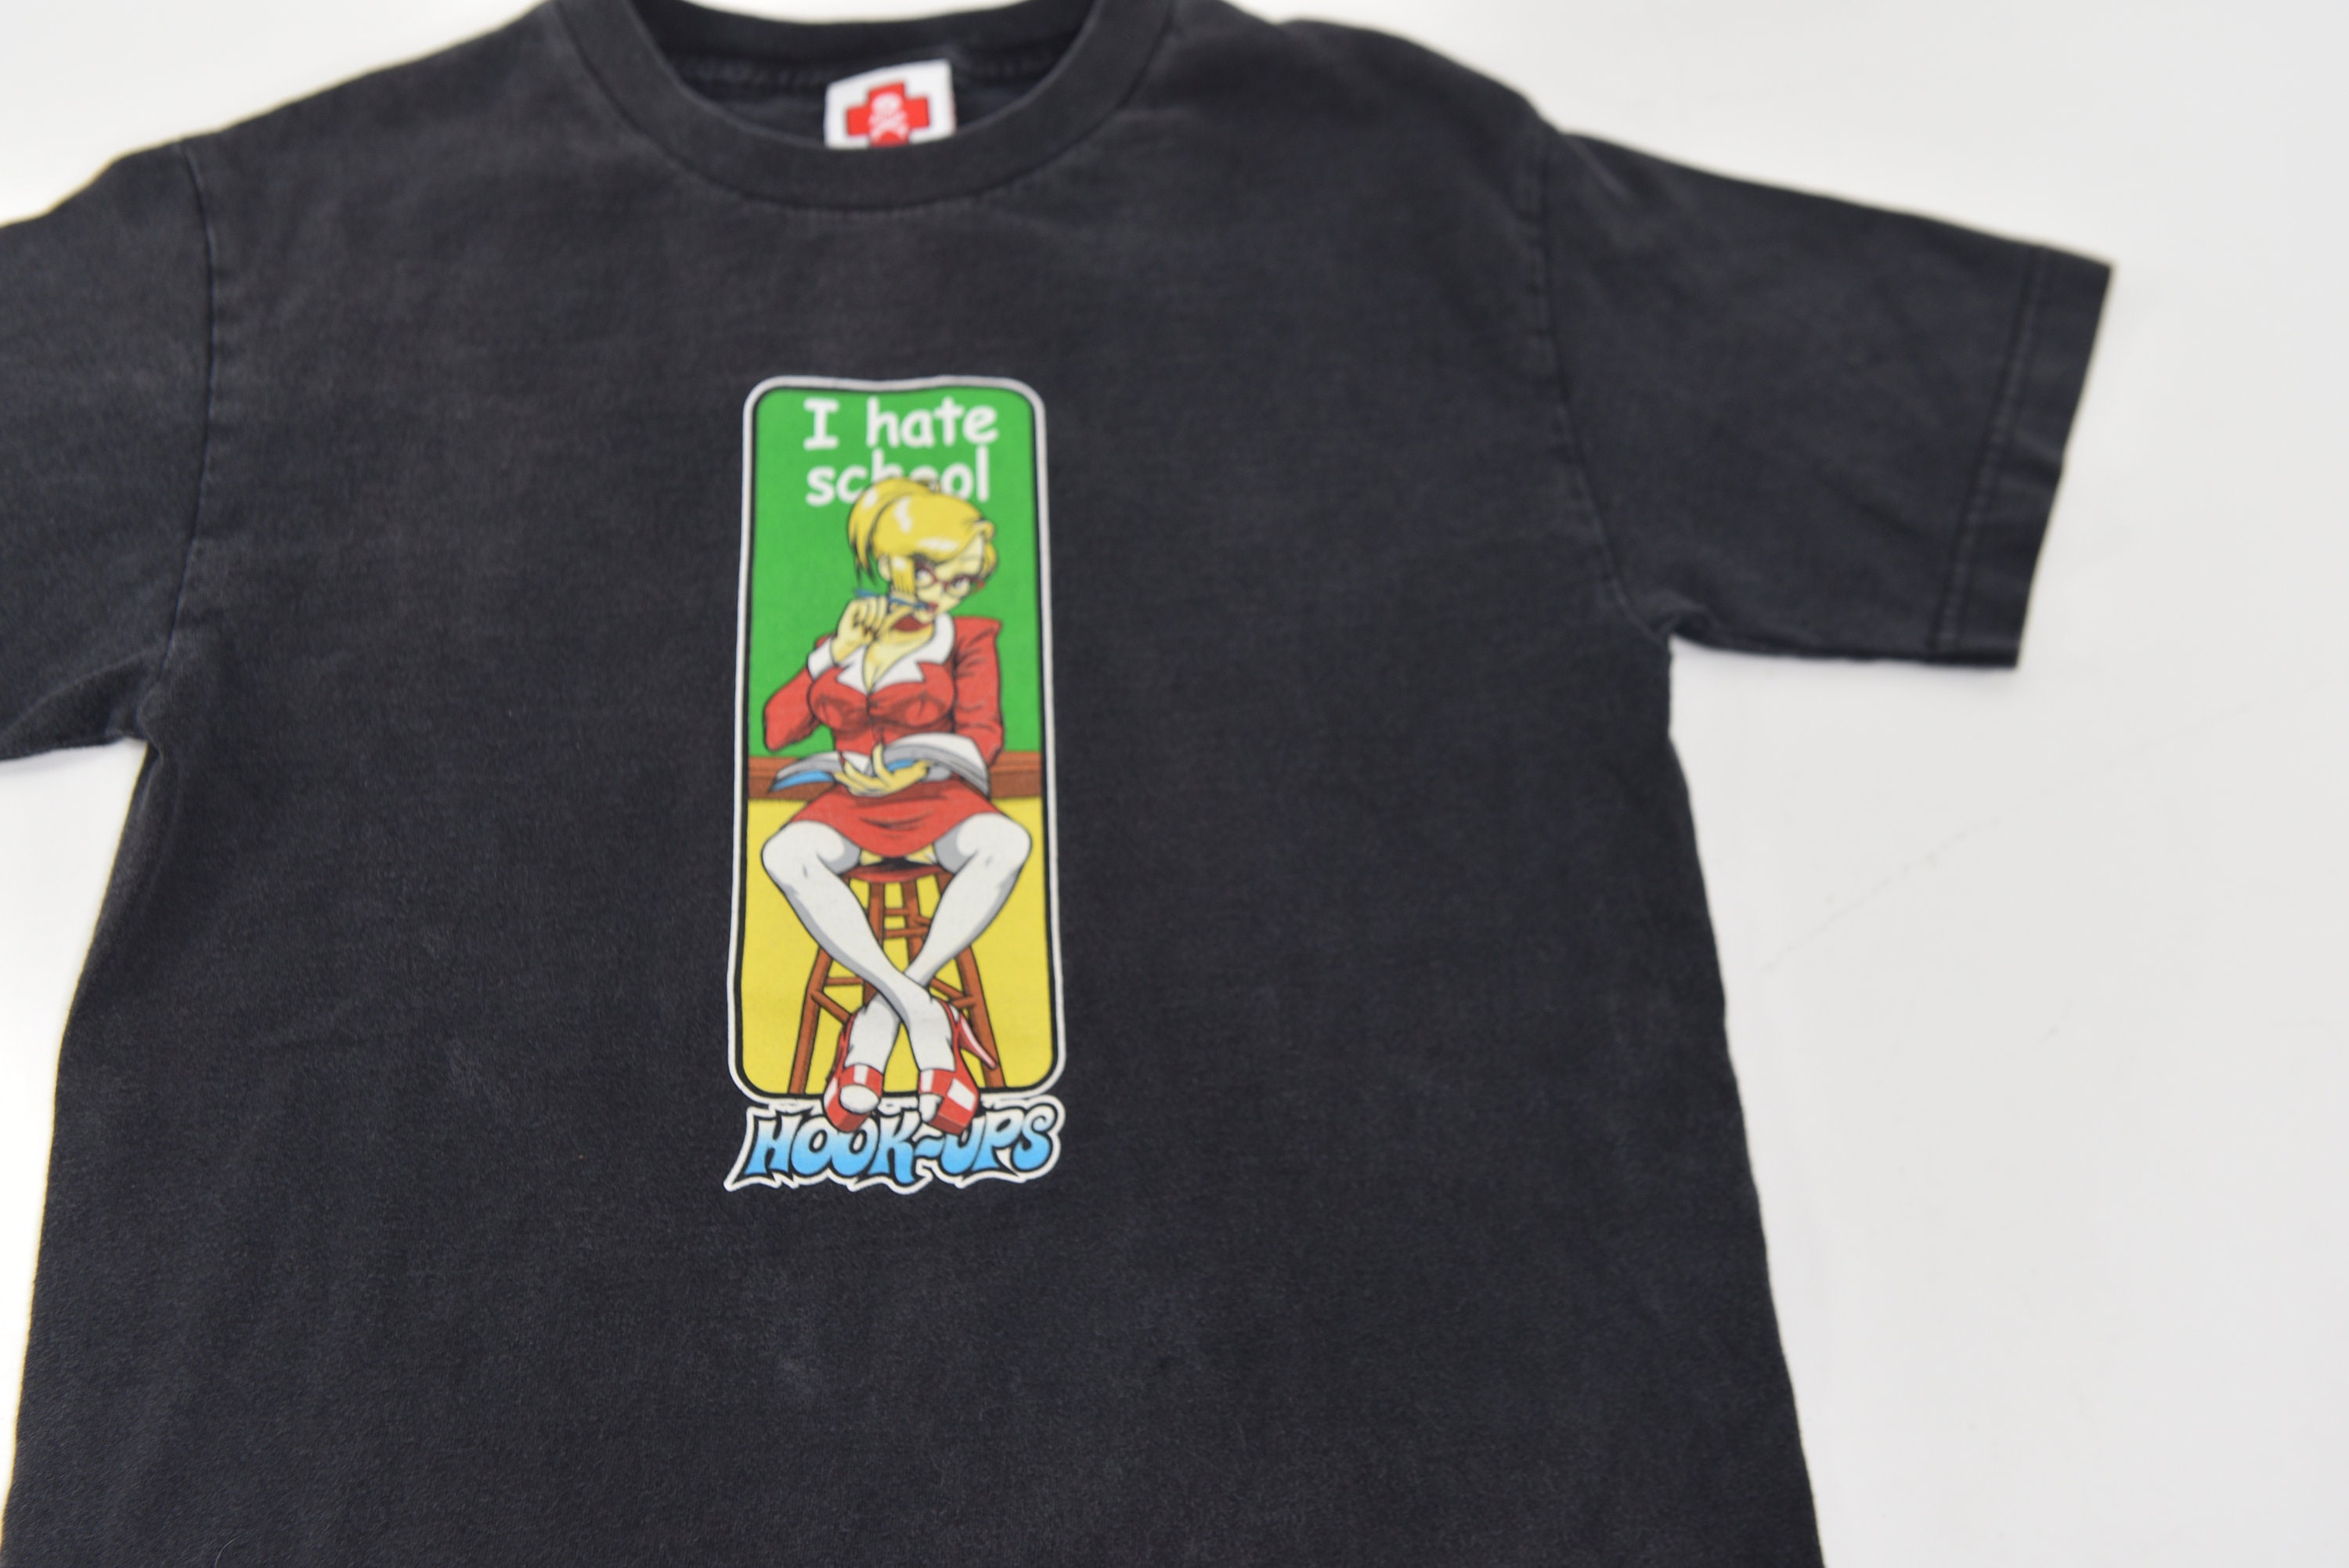 Amazing Vintage 90's Hook Ups i Hate School Skateboard T-shirt 